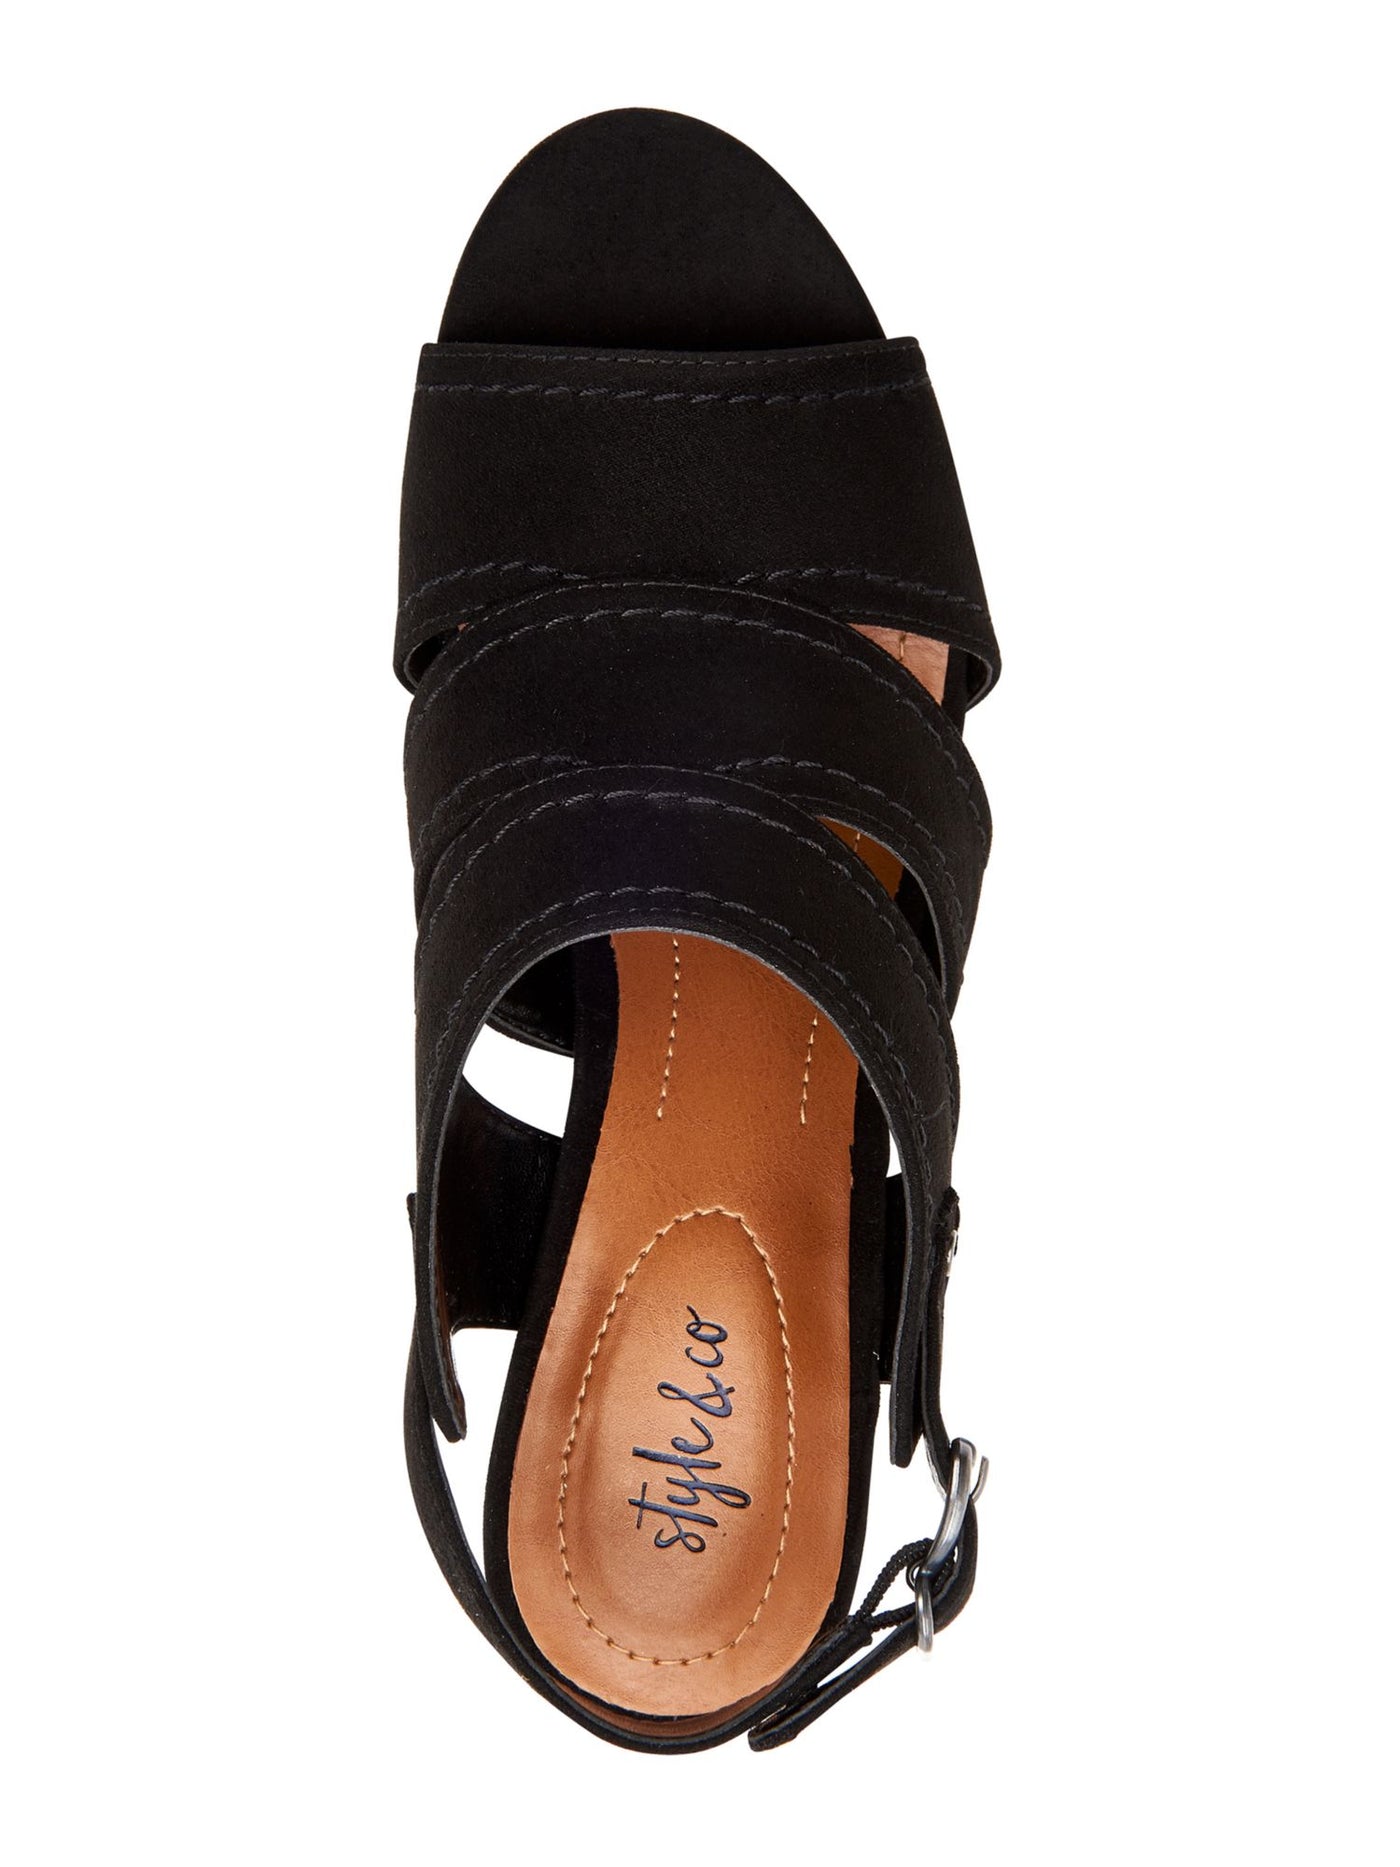 STYLE & COMPANY Womens Black Padded Comfort Hosper Round Toe Cone Heel Buckle Slingback Sandal 5 M